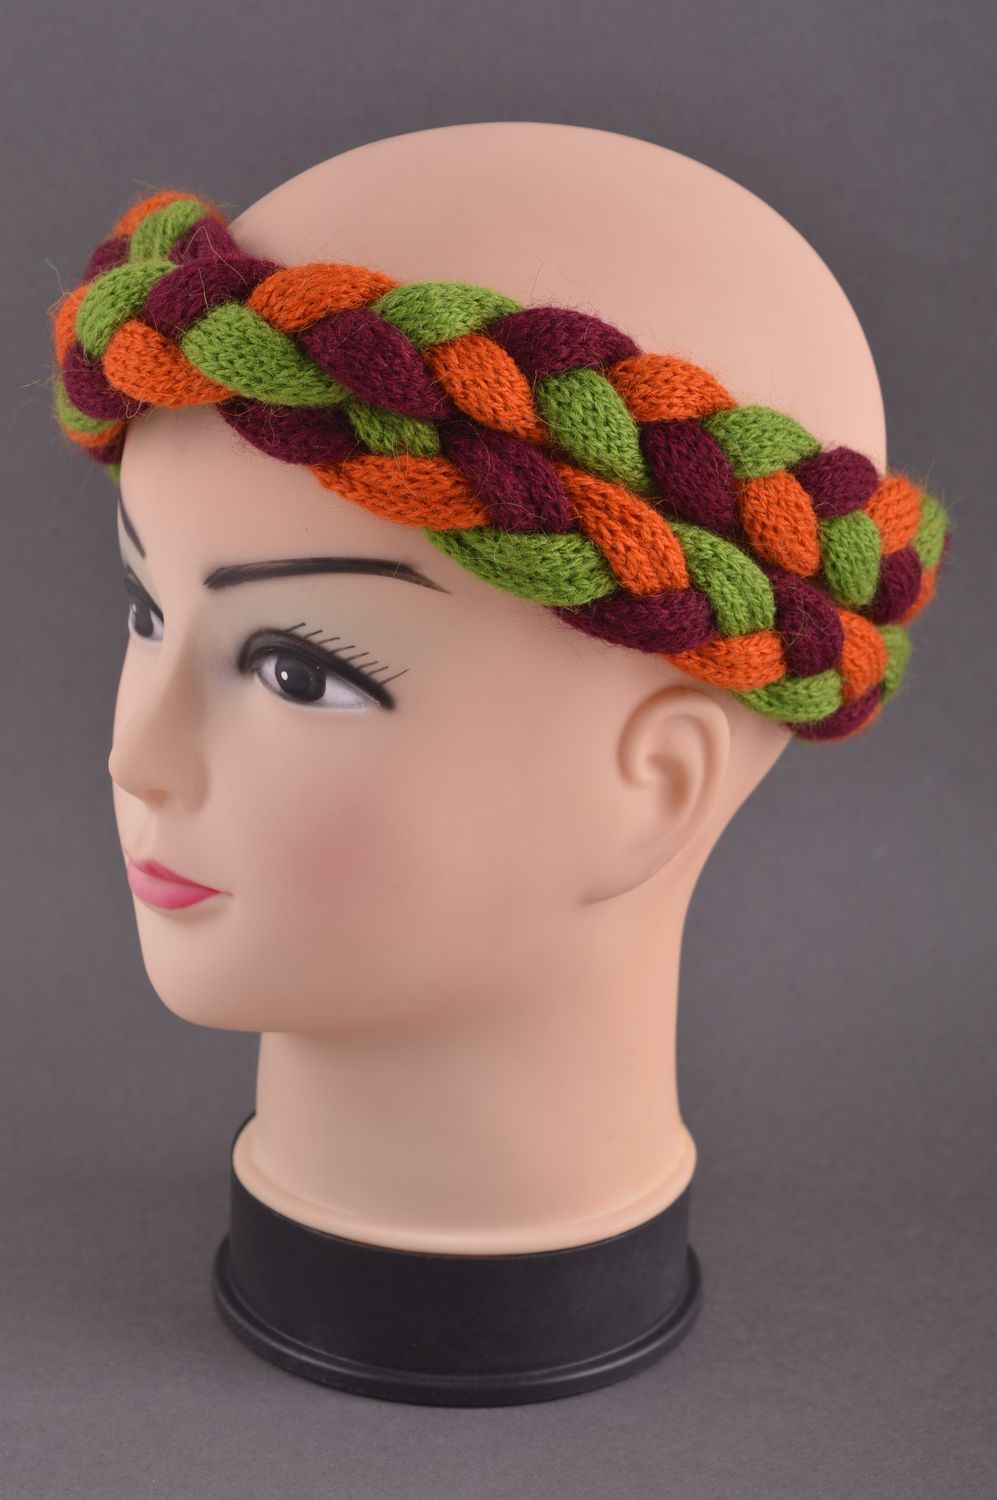 Handmade knitted headband warm headband fashion accessories for women photo 1